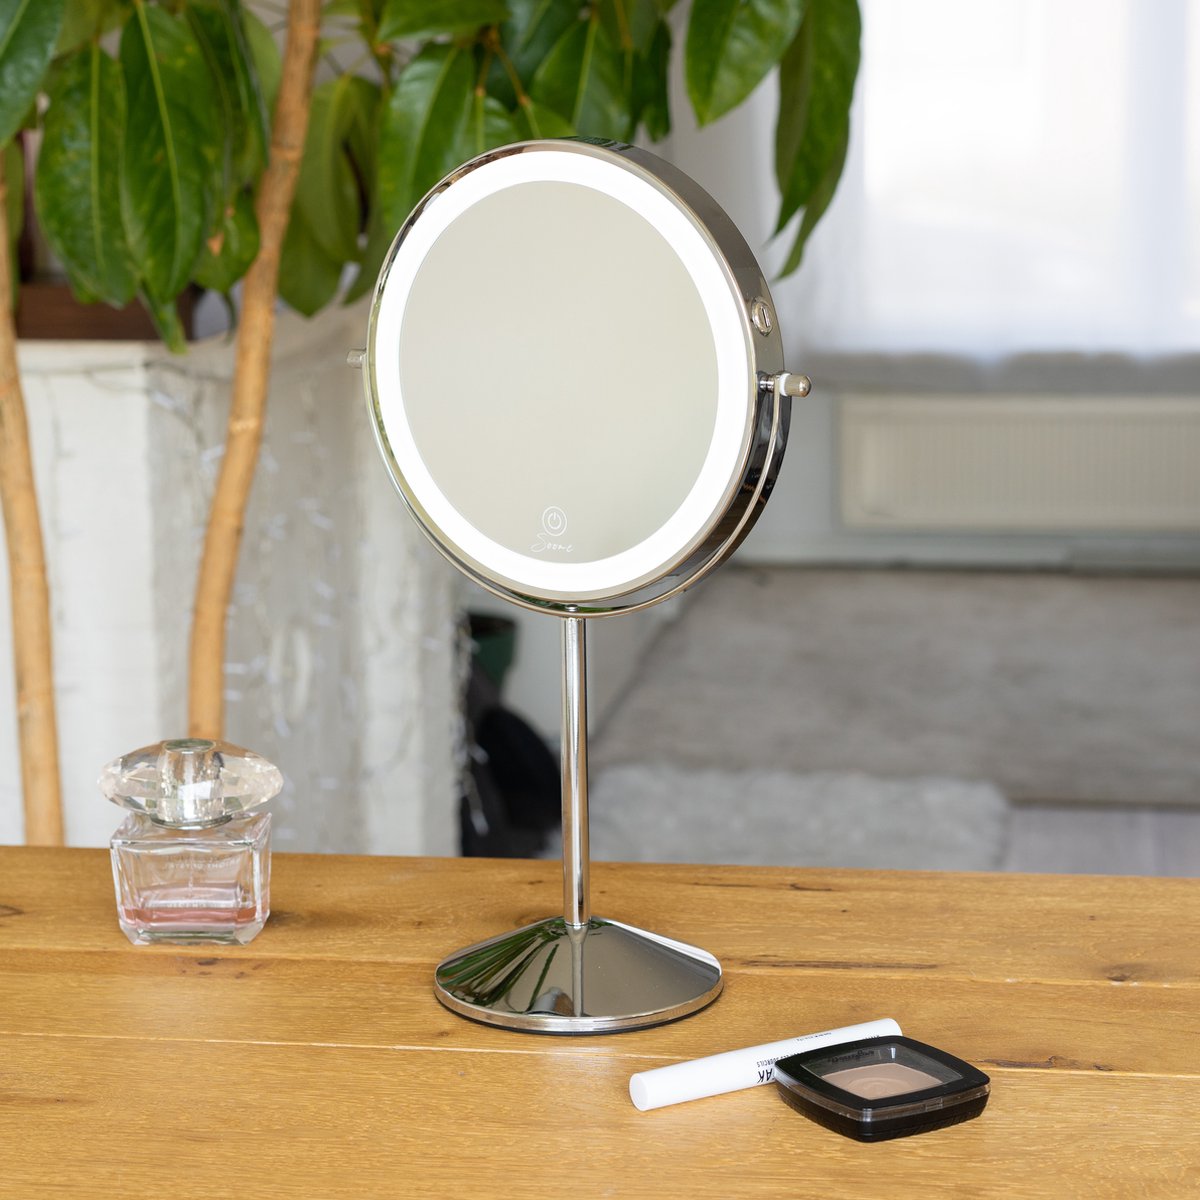 Soome Valo make-up led spiegel - 10x vergroting